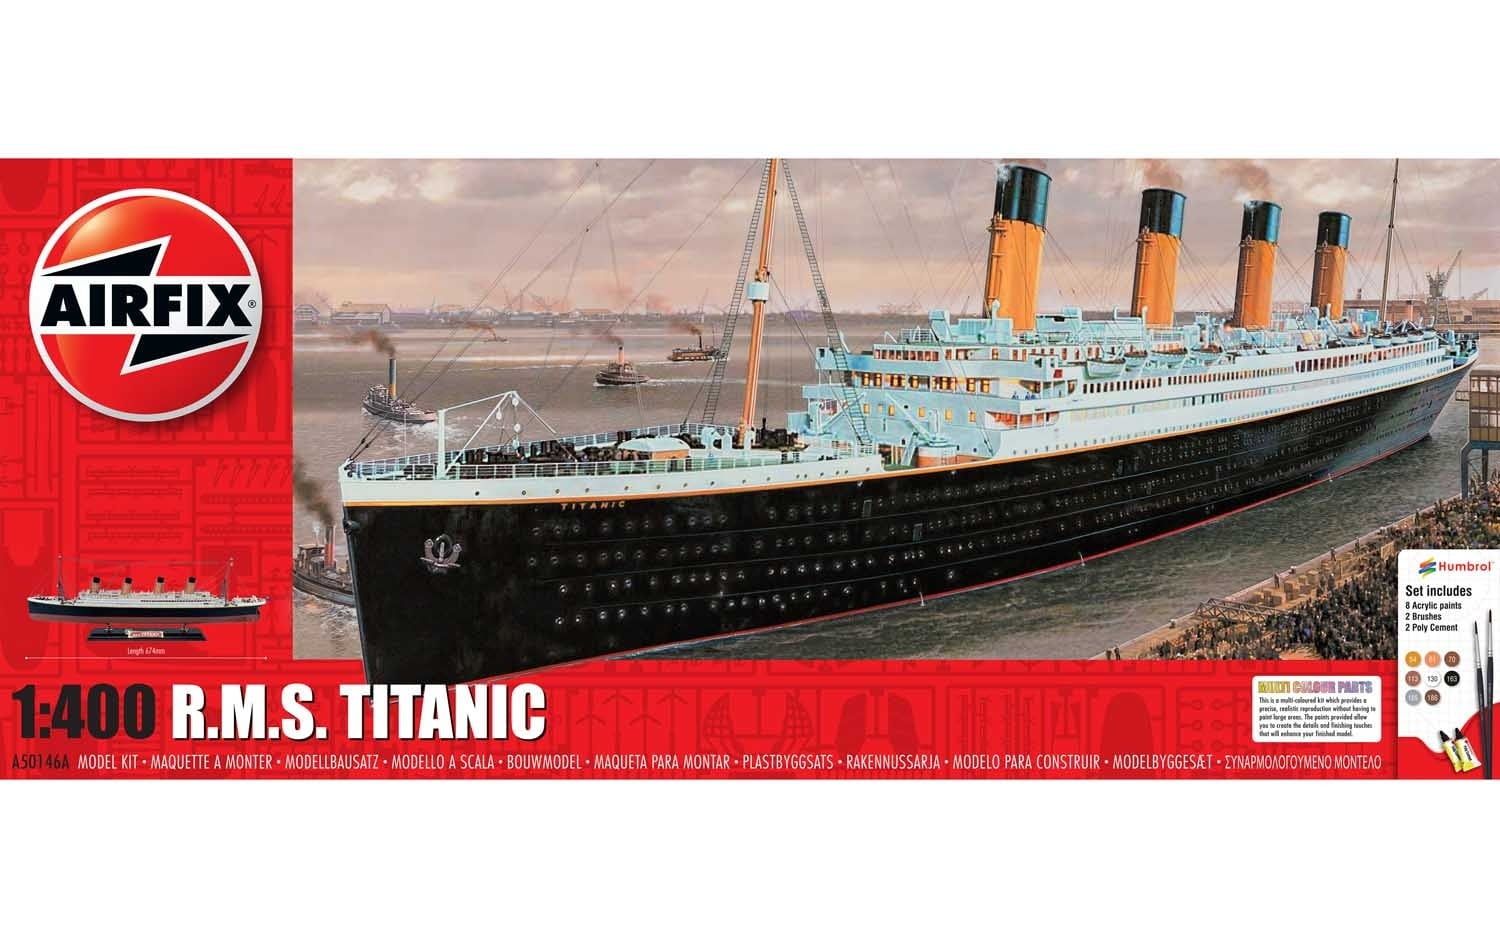  Airfix R M S Titanic Gift Set